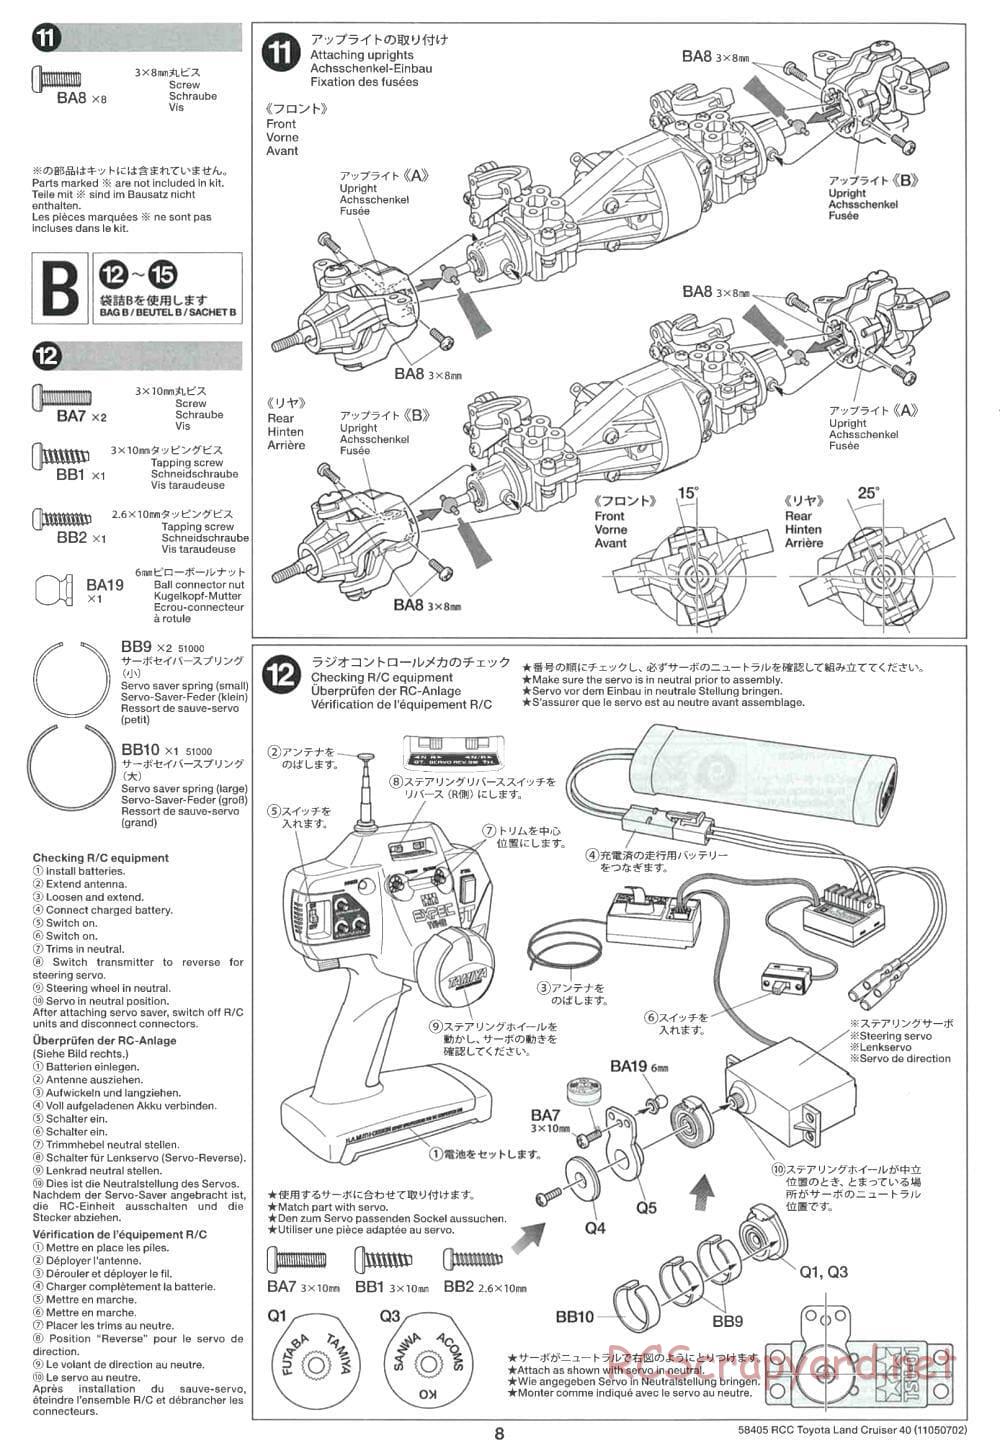 Tamiya - Toyota Land Cruiser 40 - CR-01 Chassis - Manual - Page 8